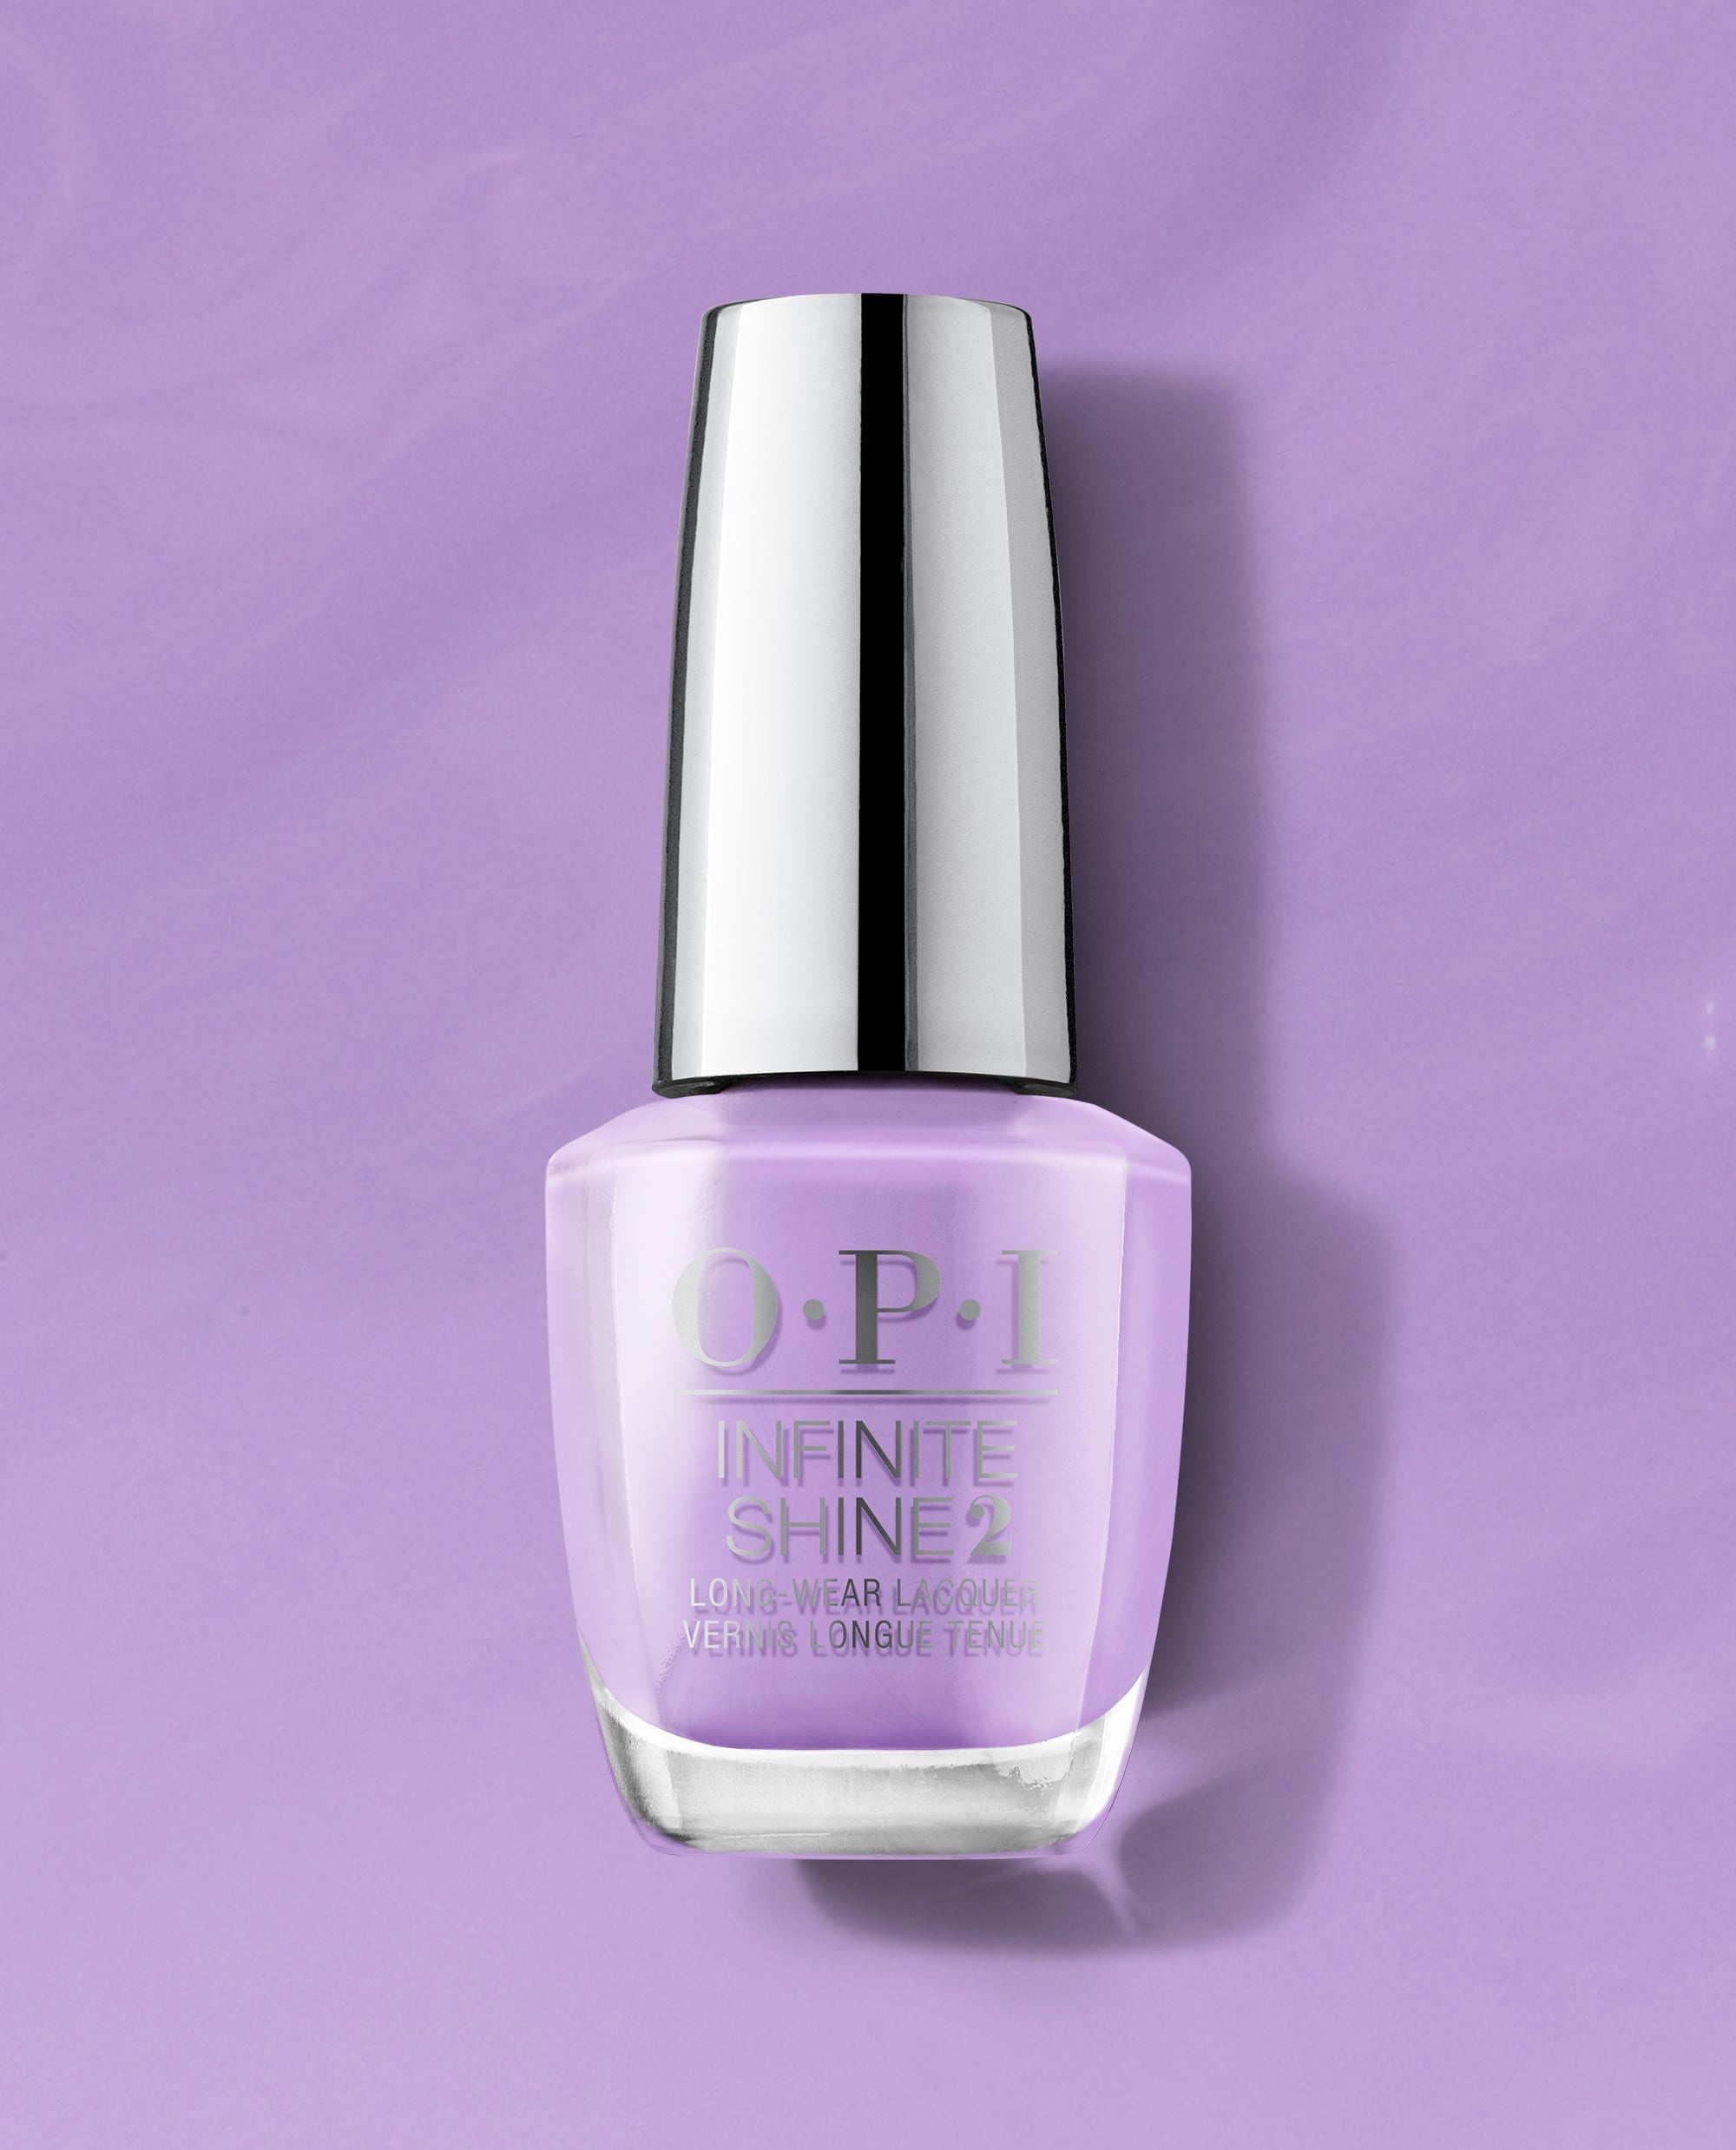 OPI Do You Lilac It? Nail Polish Infinite Shine Infinite Shine Iconic Shades